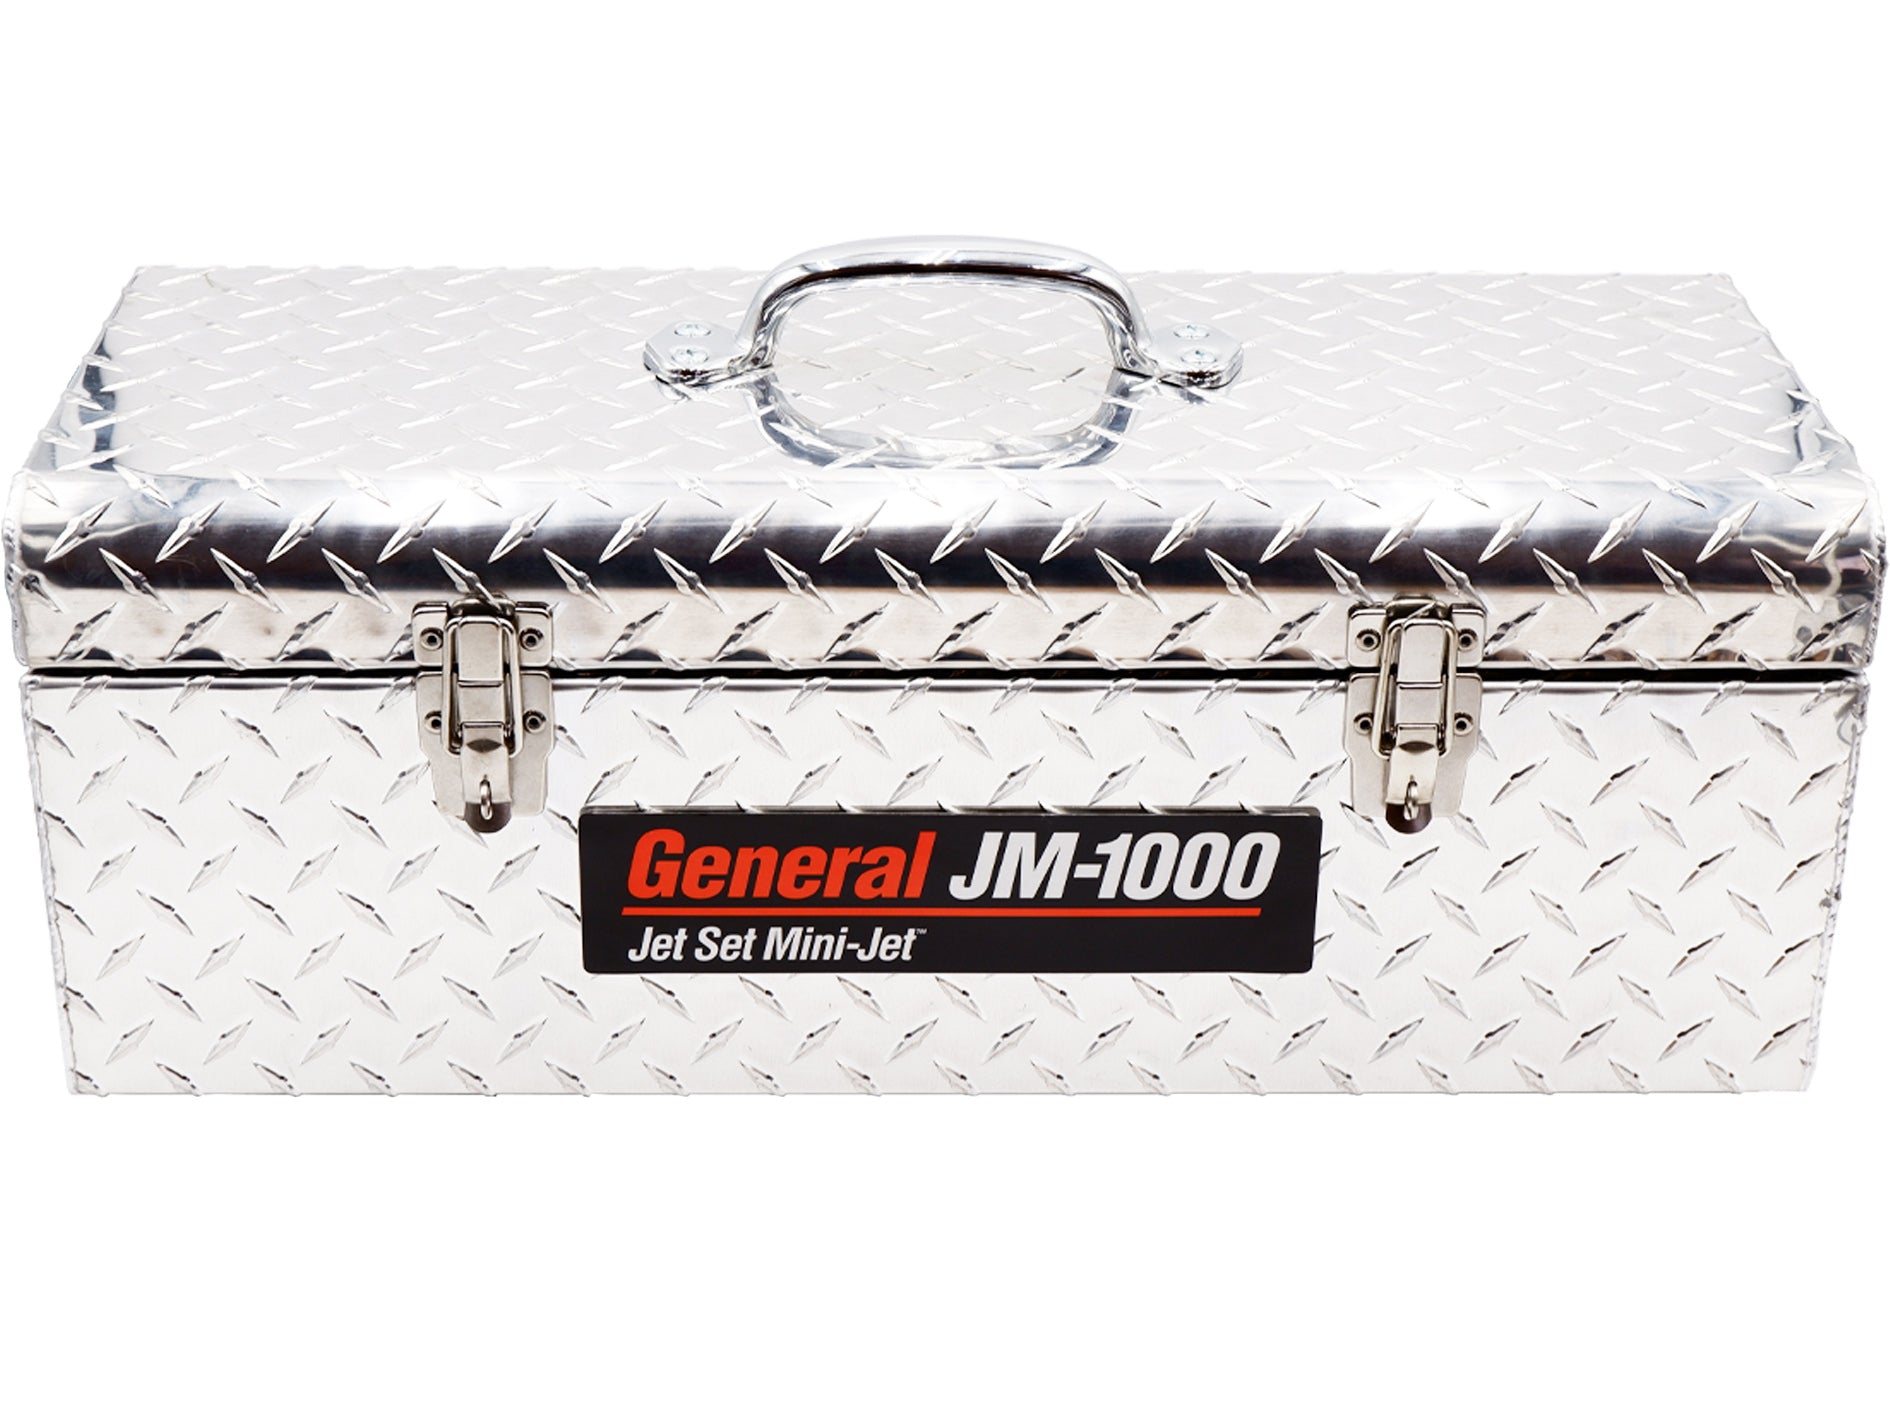 General Pipe Cleaners JM-1000-B Mini Jet Drain Cleaning Machine